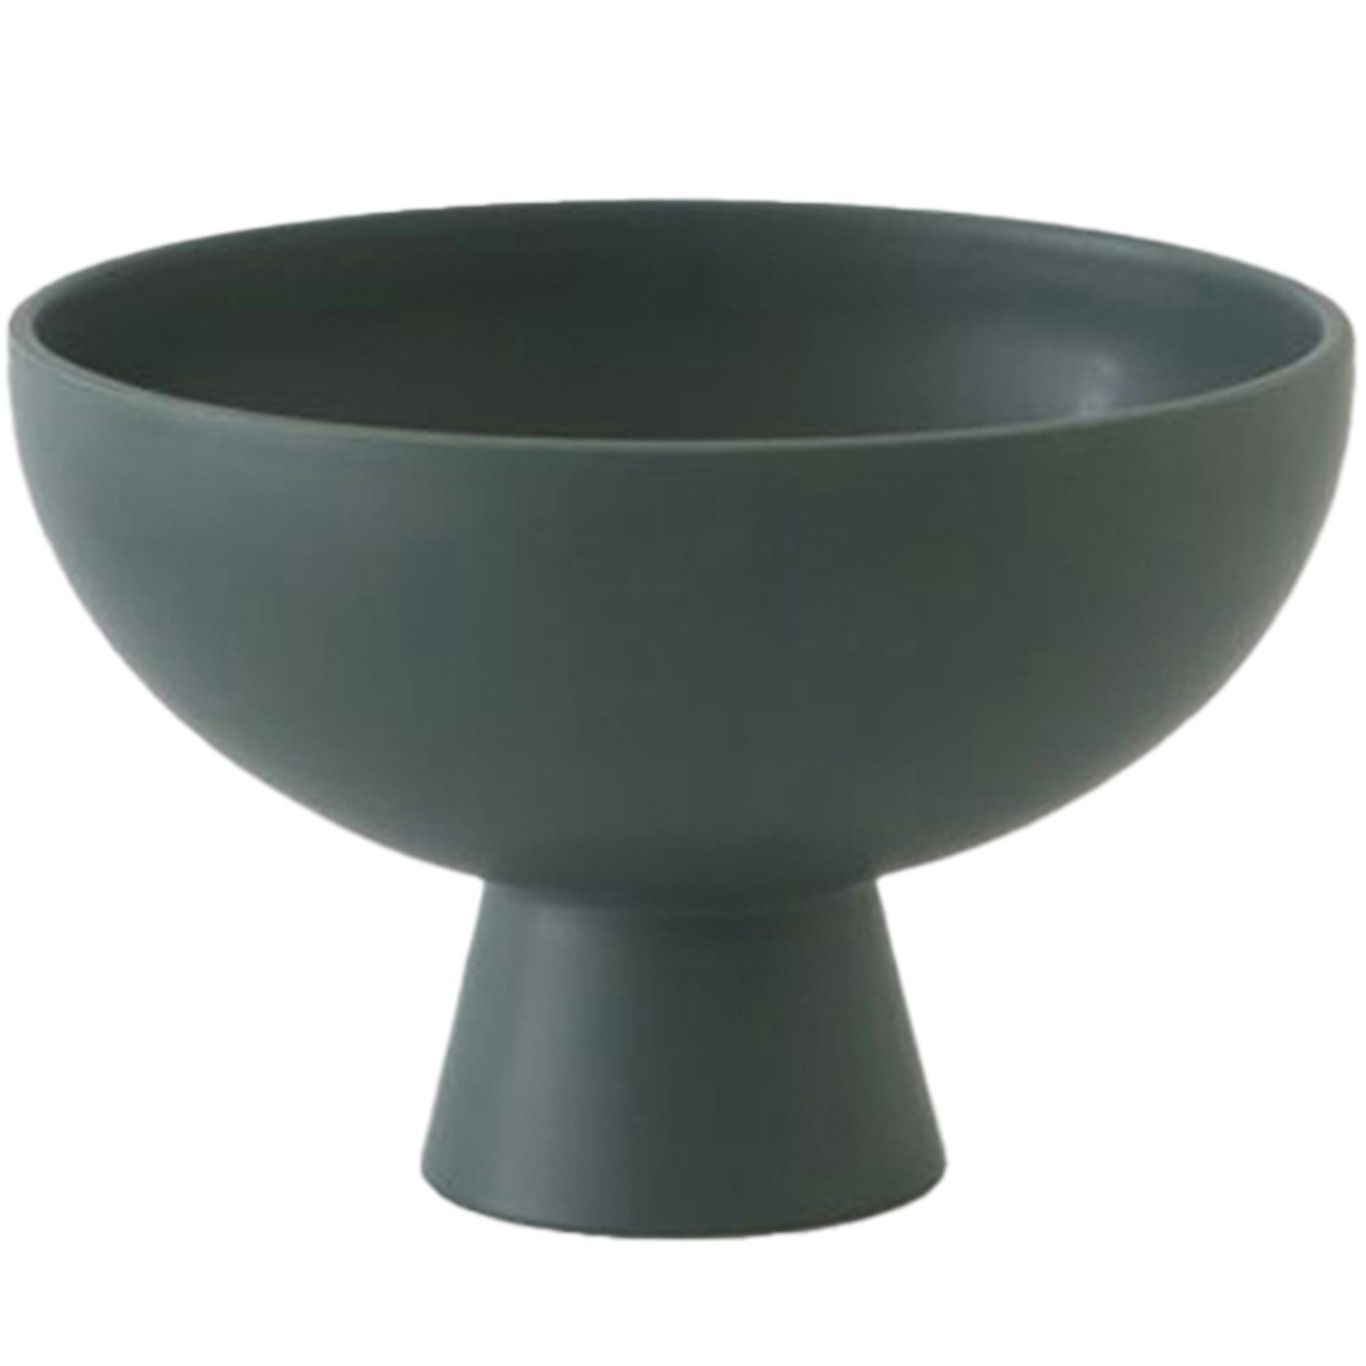 Strøm Bowl With Foot Ø19 cm, Green Gables